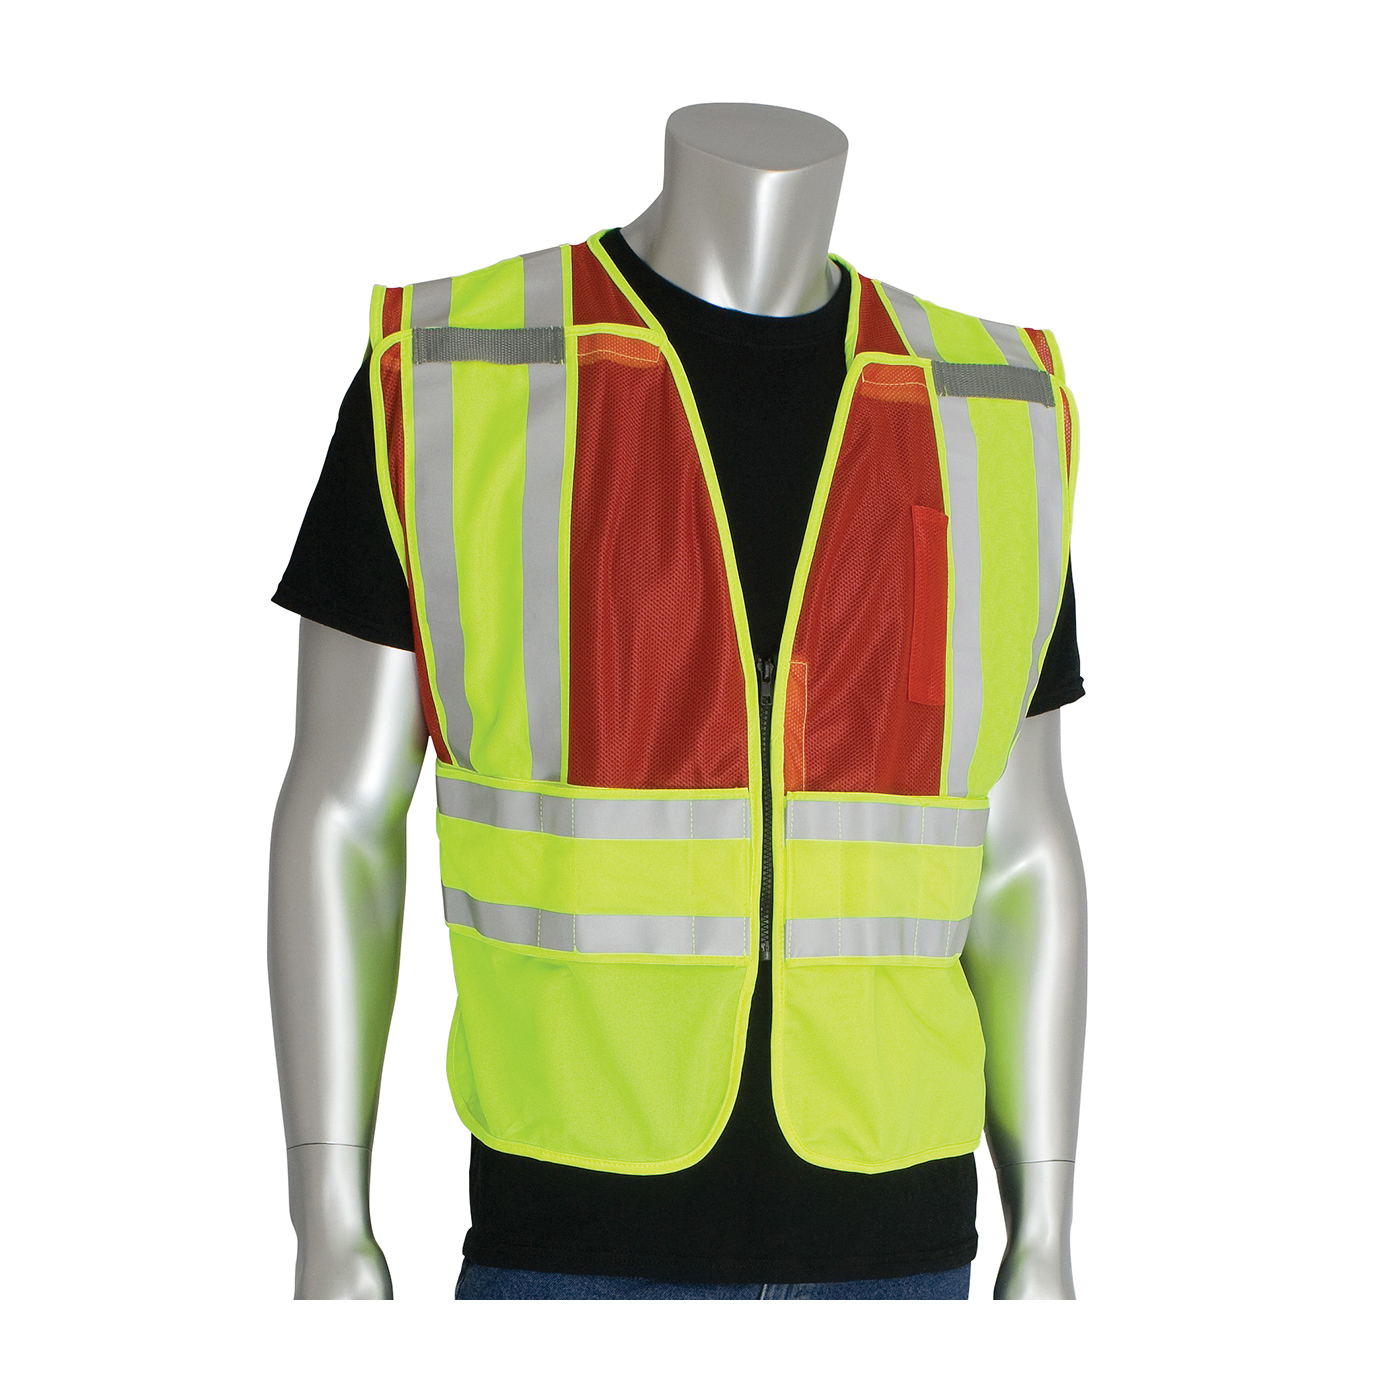 PIP® SafetyGear 302-PSV-RED-NL-2X/5X Public Safety Vest, 2XL/5XL, Red/Hi-Viz Lime Yellow, Polyester, Front Zipper Closure, 2 Pockets, ANSI Class: Class 2, ANSI 207-2011 Type P